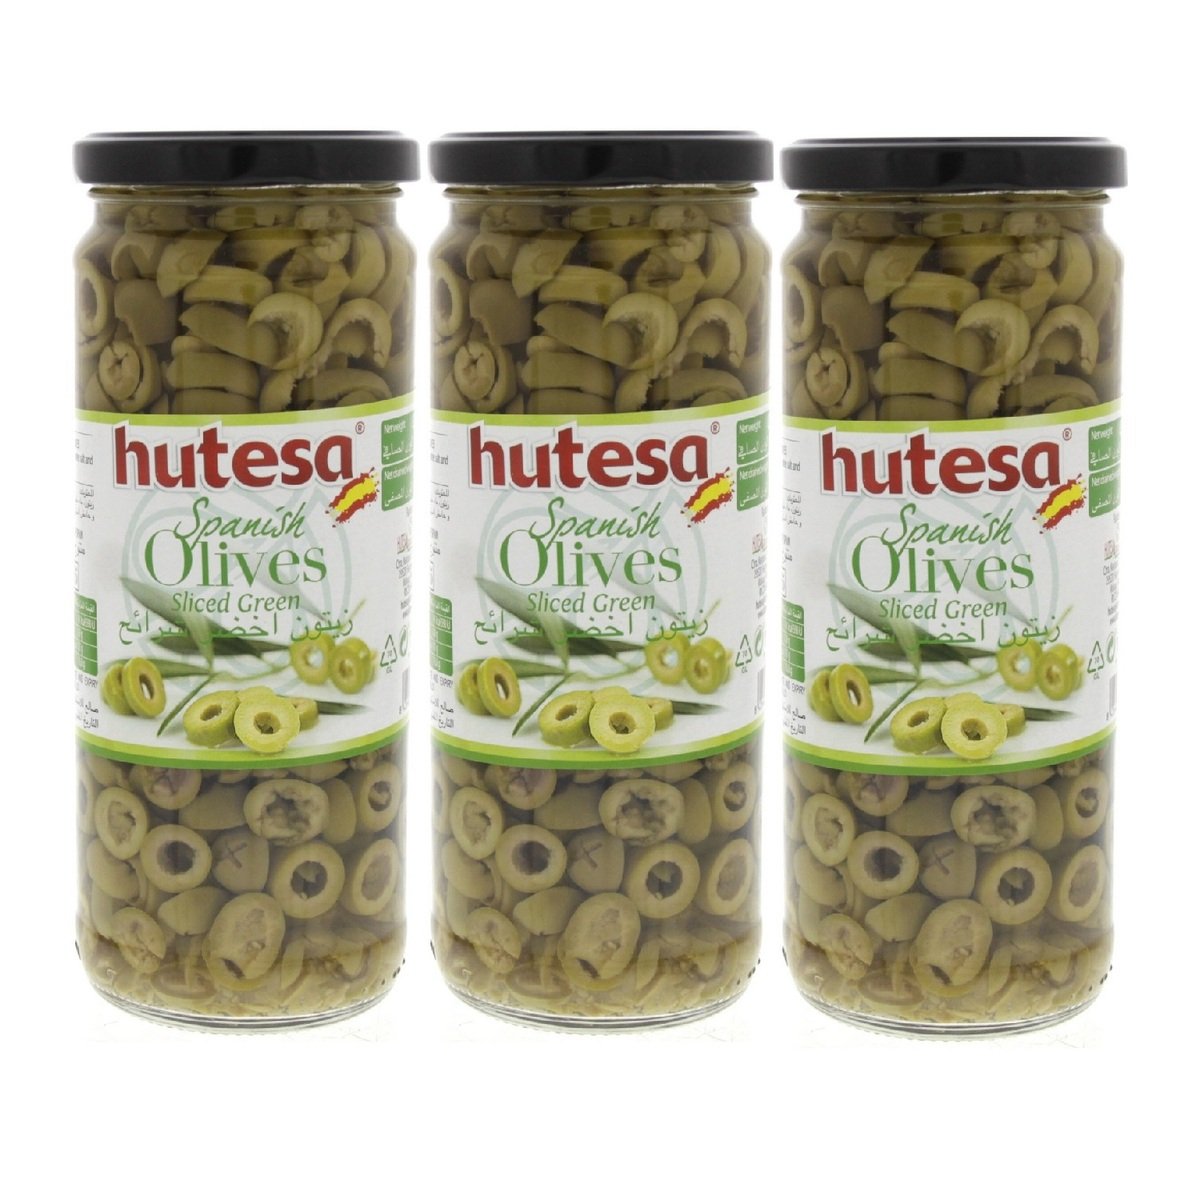 Hutesa Spanish Olives Sliced Green 3 x 230g